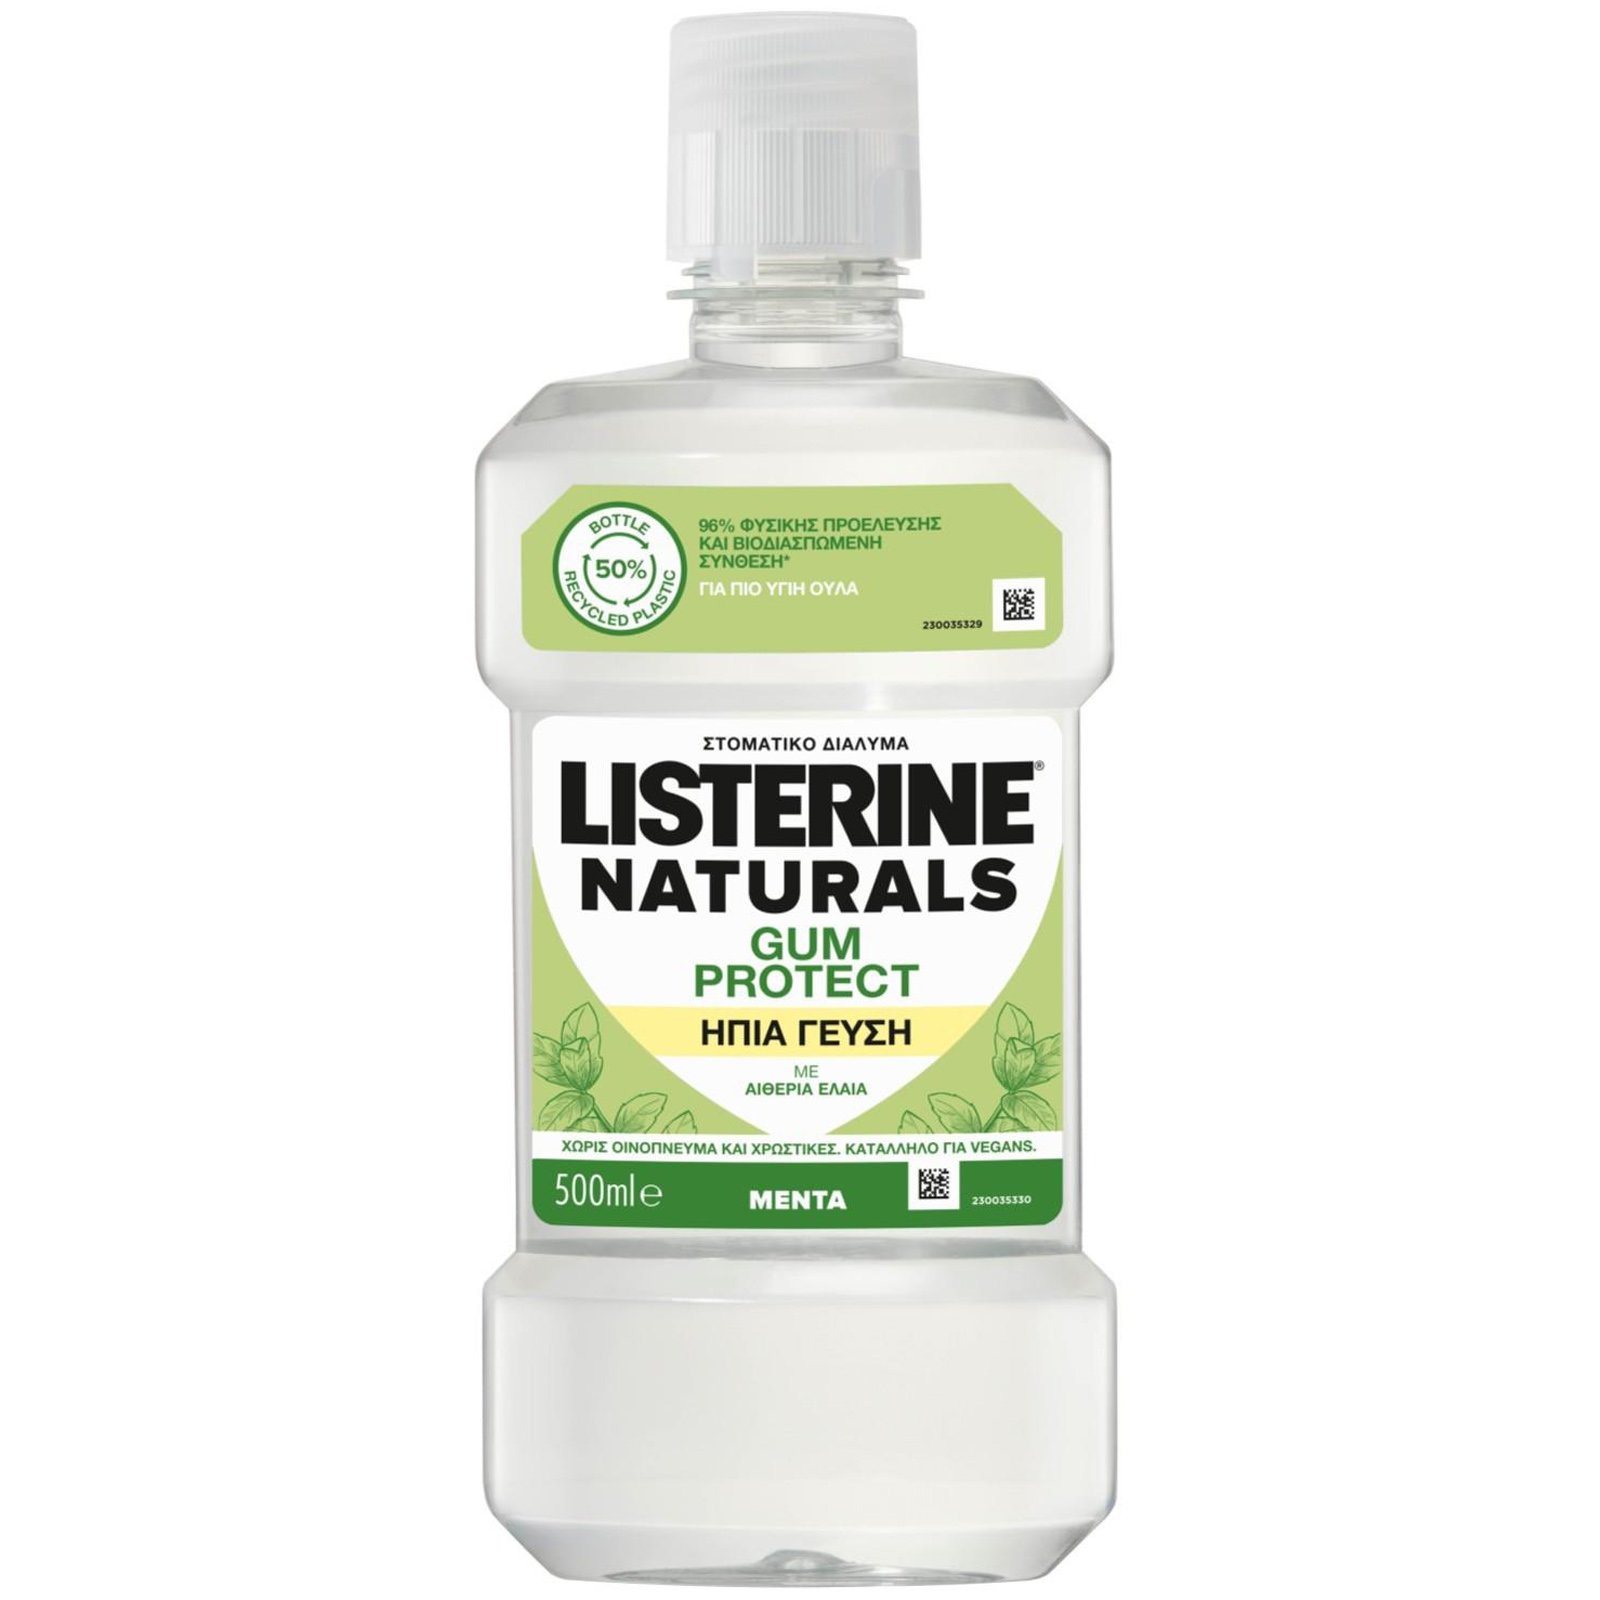 Listerine Naturals Gum Protect Fluoride Mouthwash Στοματικό Διάλυμα Χωρίς Οινόπνευμα & Χρωστικές με Ήπια Γεύση Μέντας 500ml